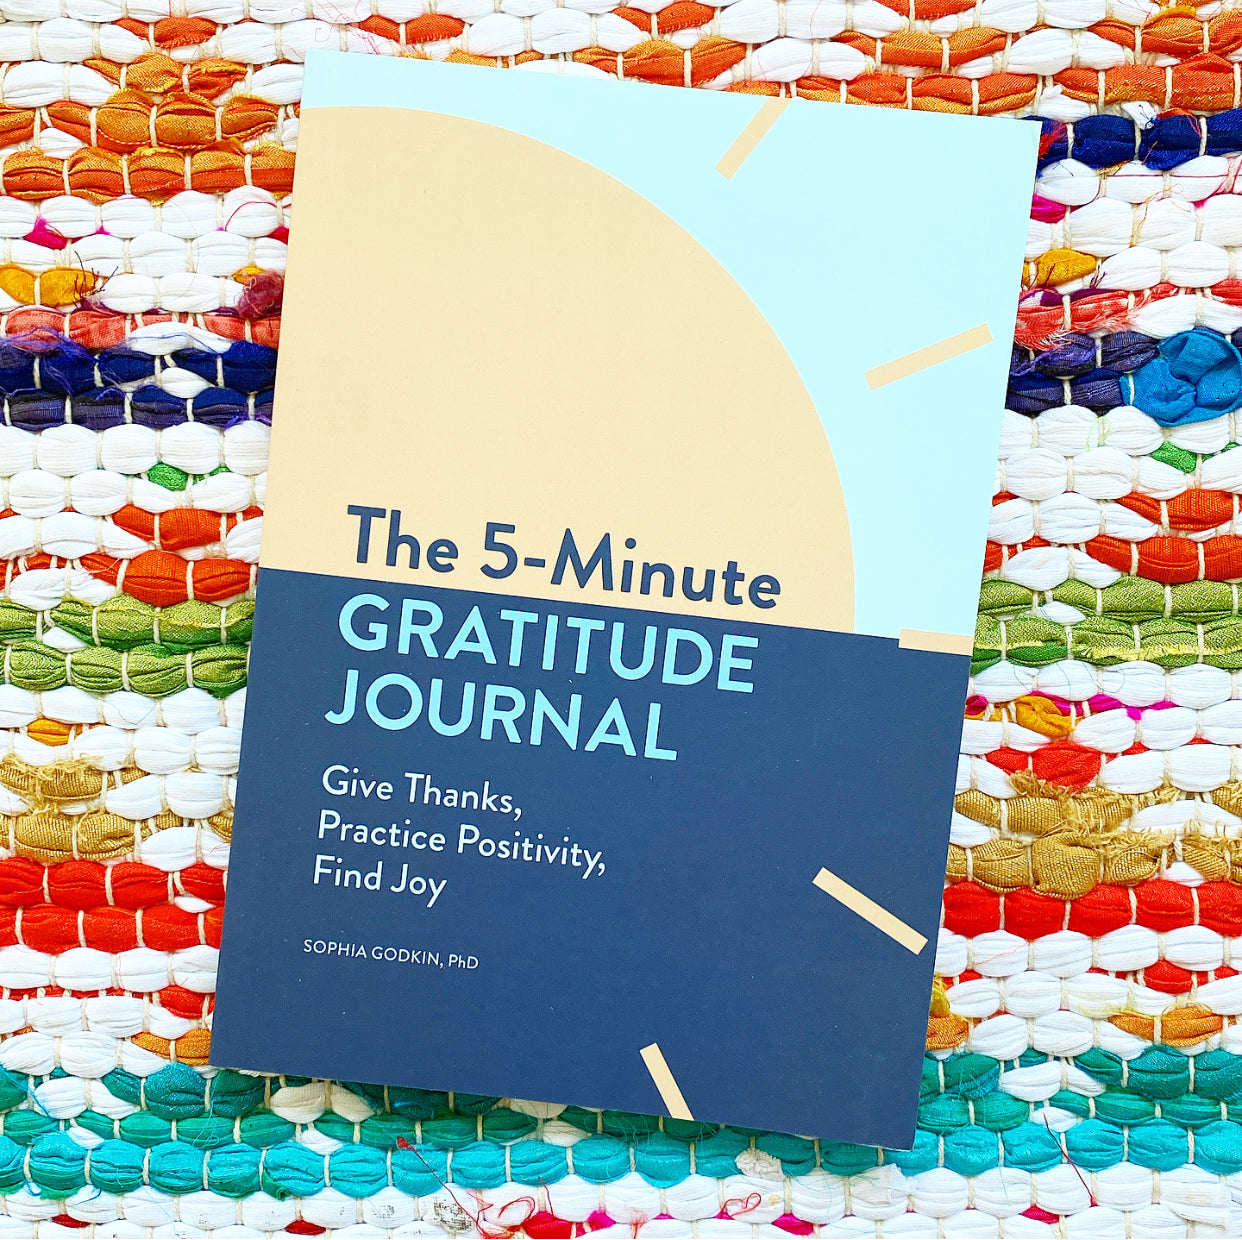 The 5-Minute Gratitude Journal: Give Thanks, Practice Positivity, Find Joy  by Sophia Godkin PhD, Paperback